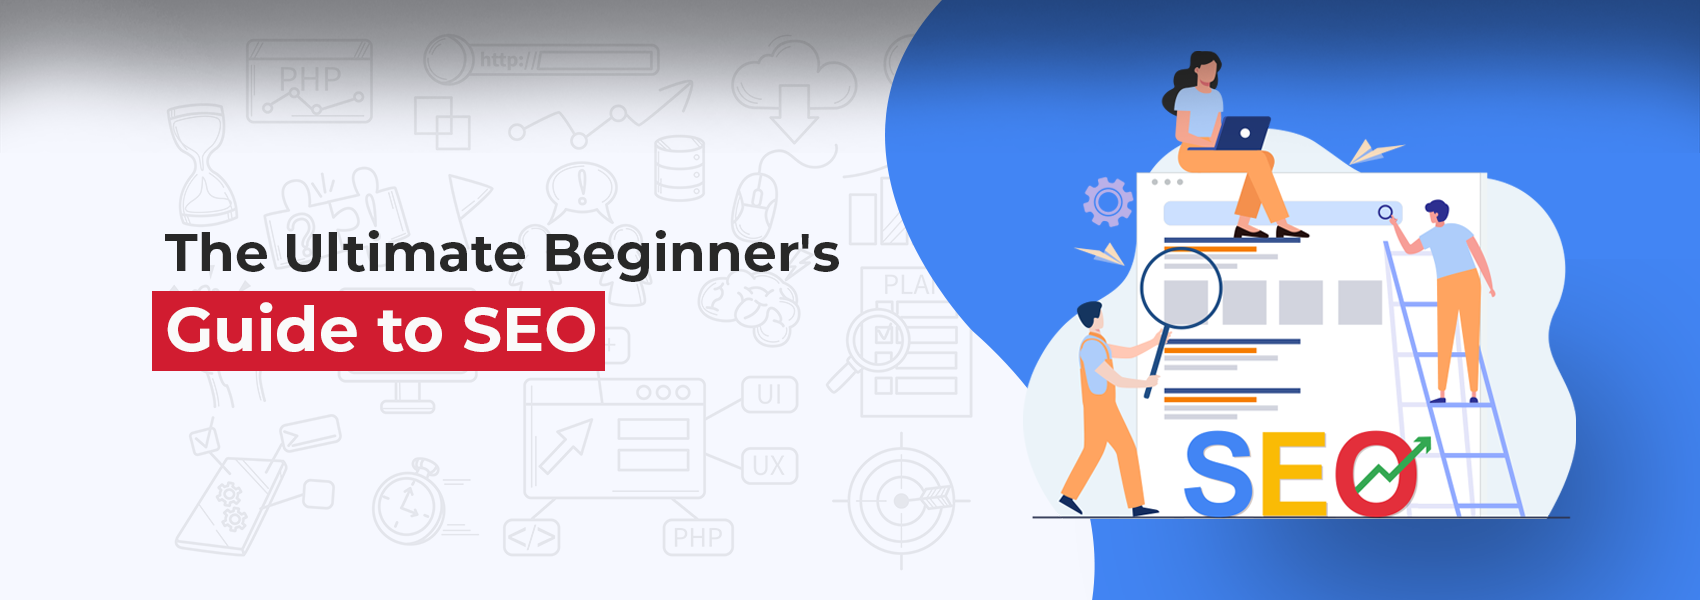 Beginner's Guide to SEO